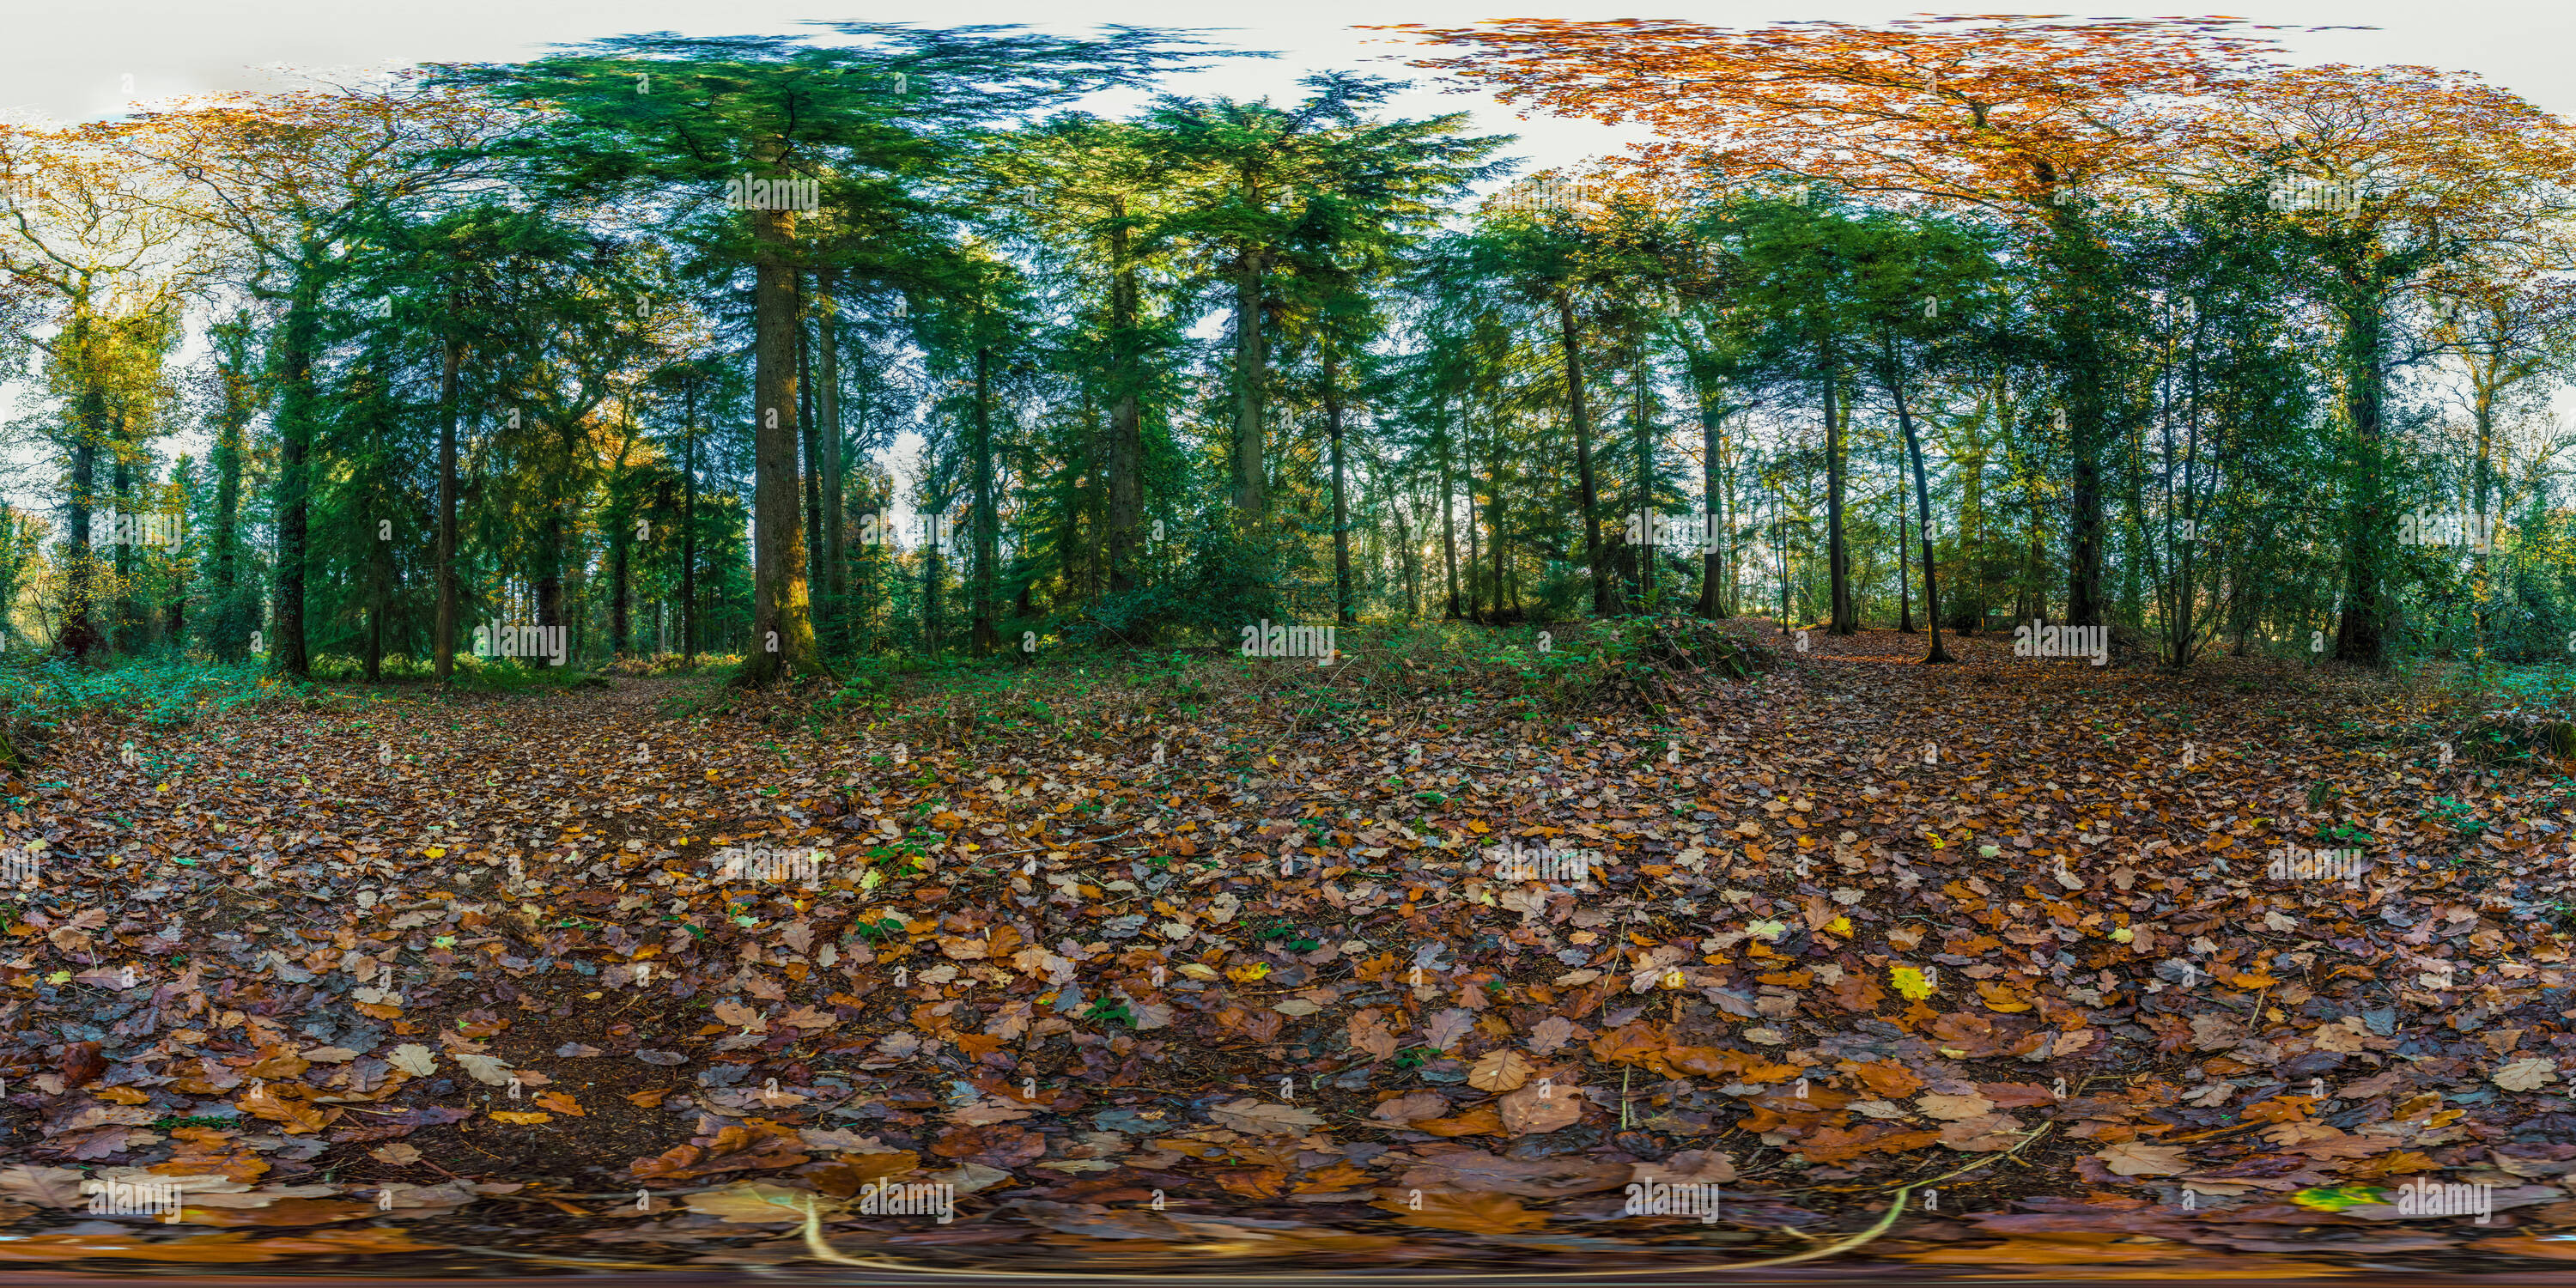 360 panorama photosphere google cardboard